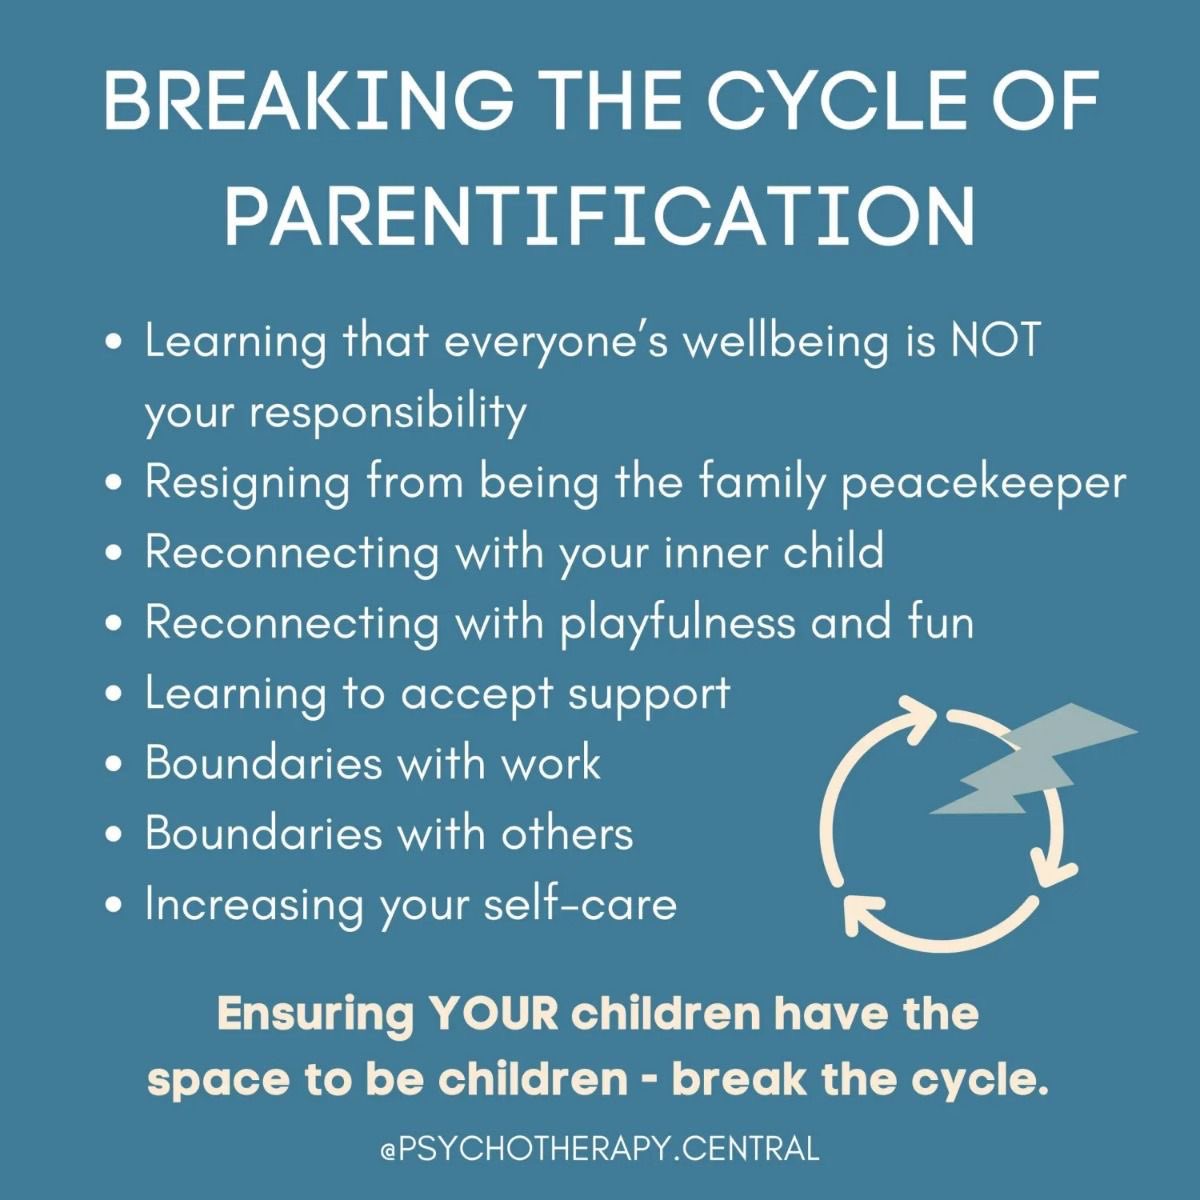 #parentification #parenting #childhood #trauma #responsibility #families #boundaries